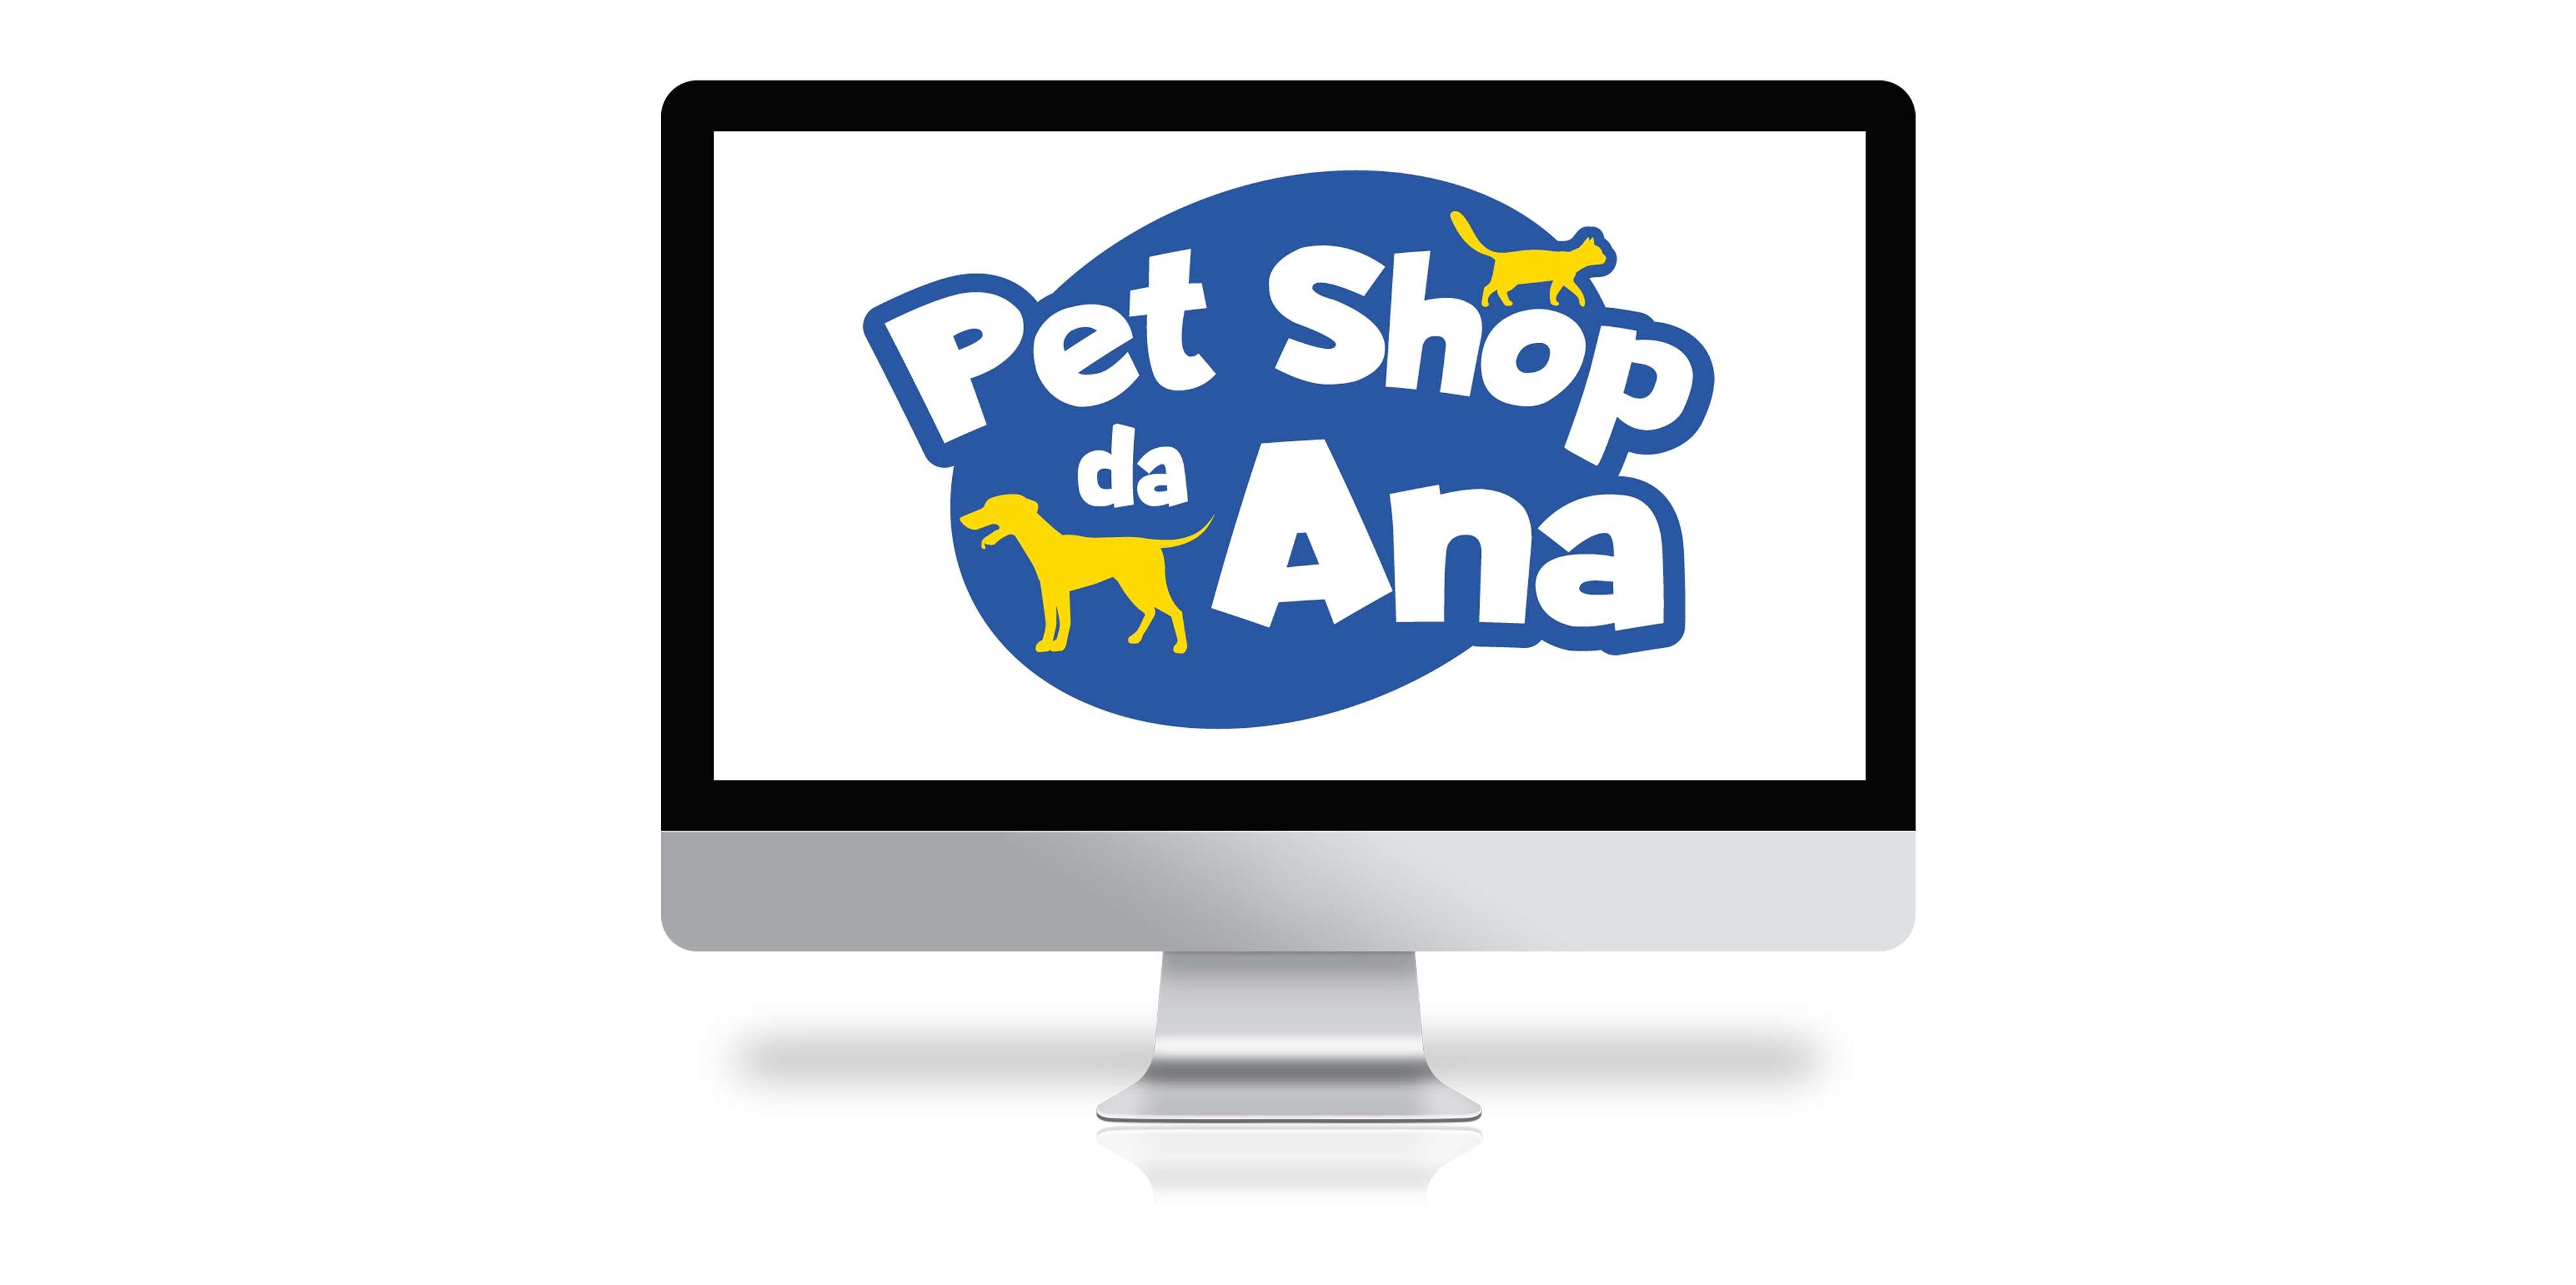 Pet Shop da Ana